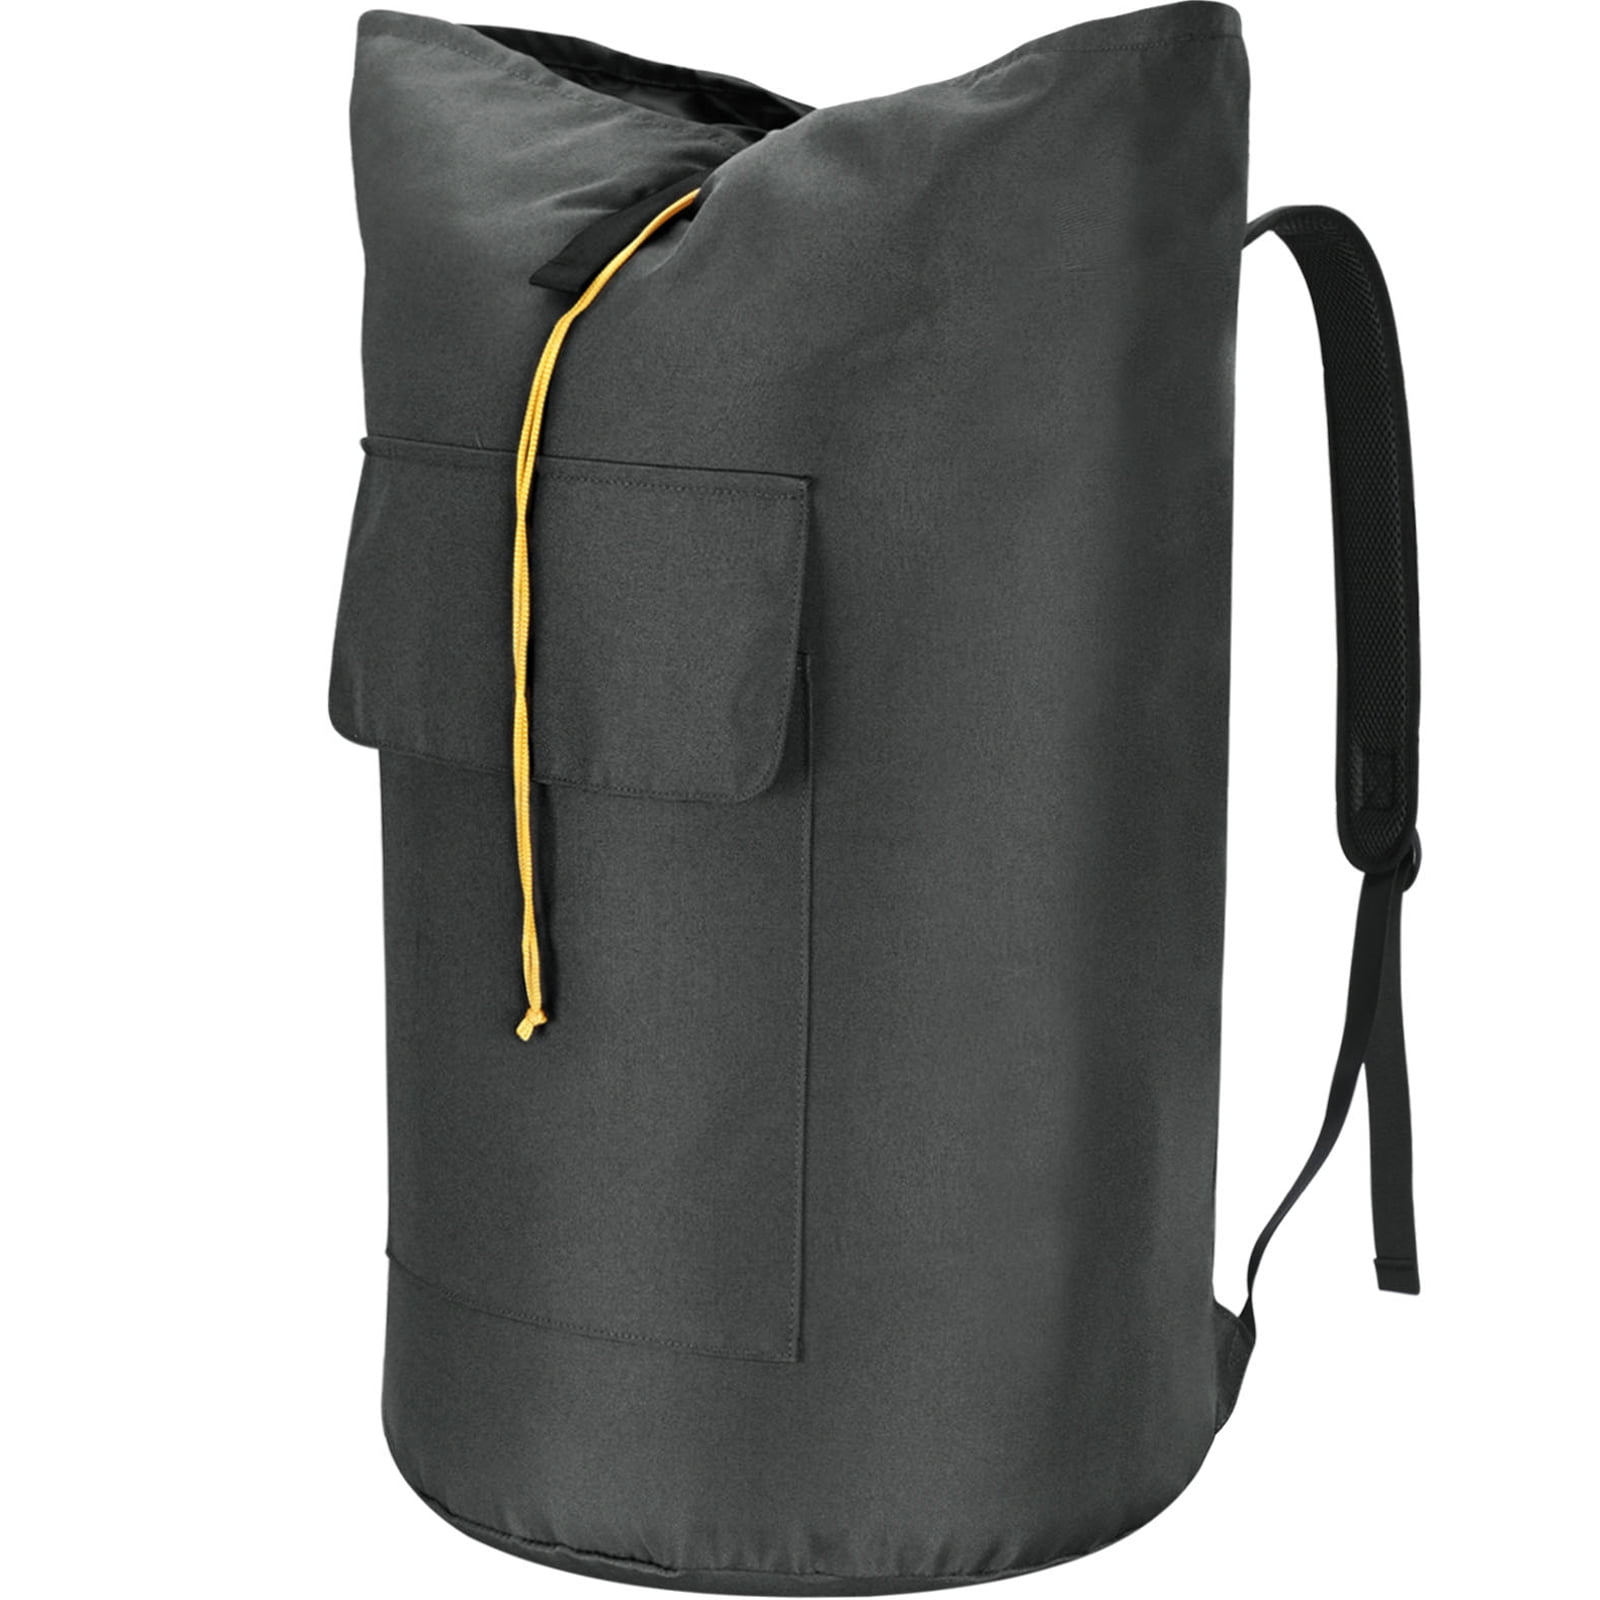 Laundry Bag For Travels, Black - L